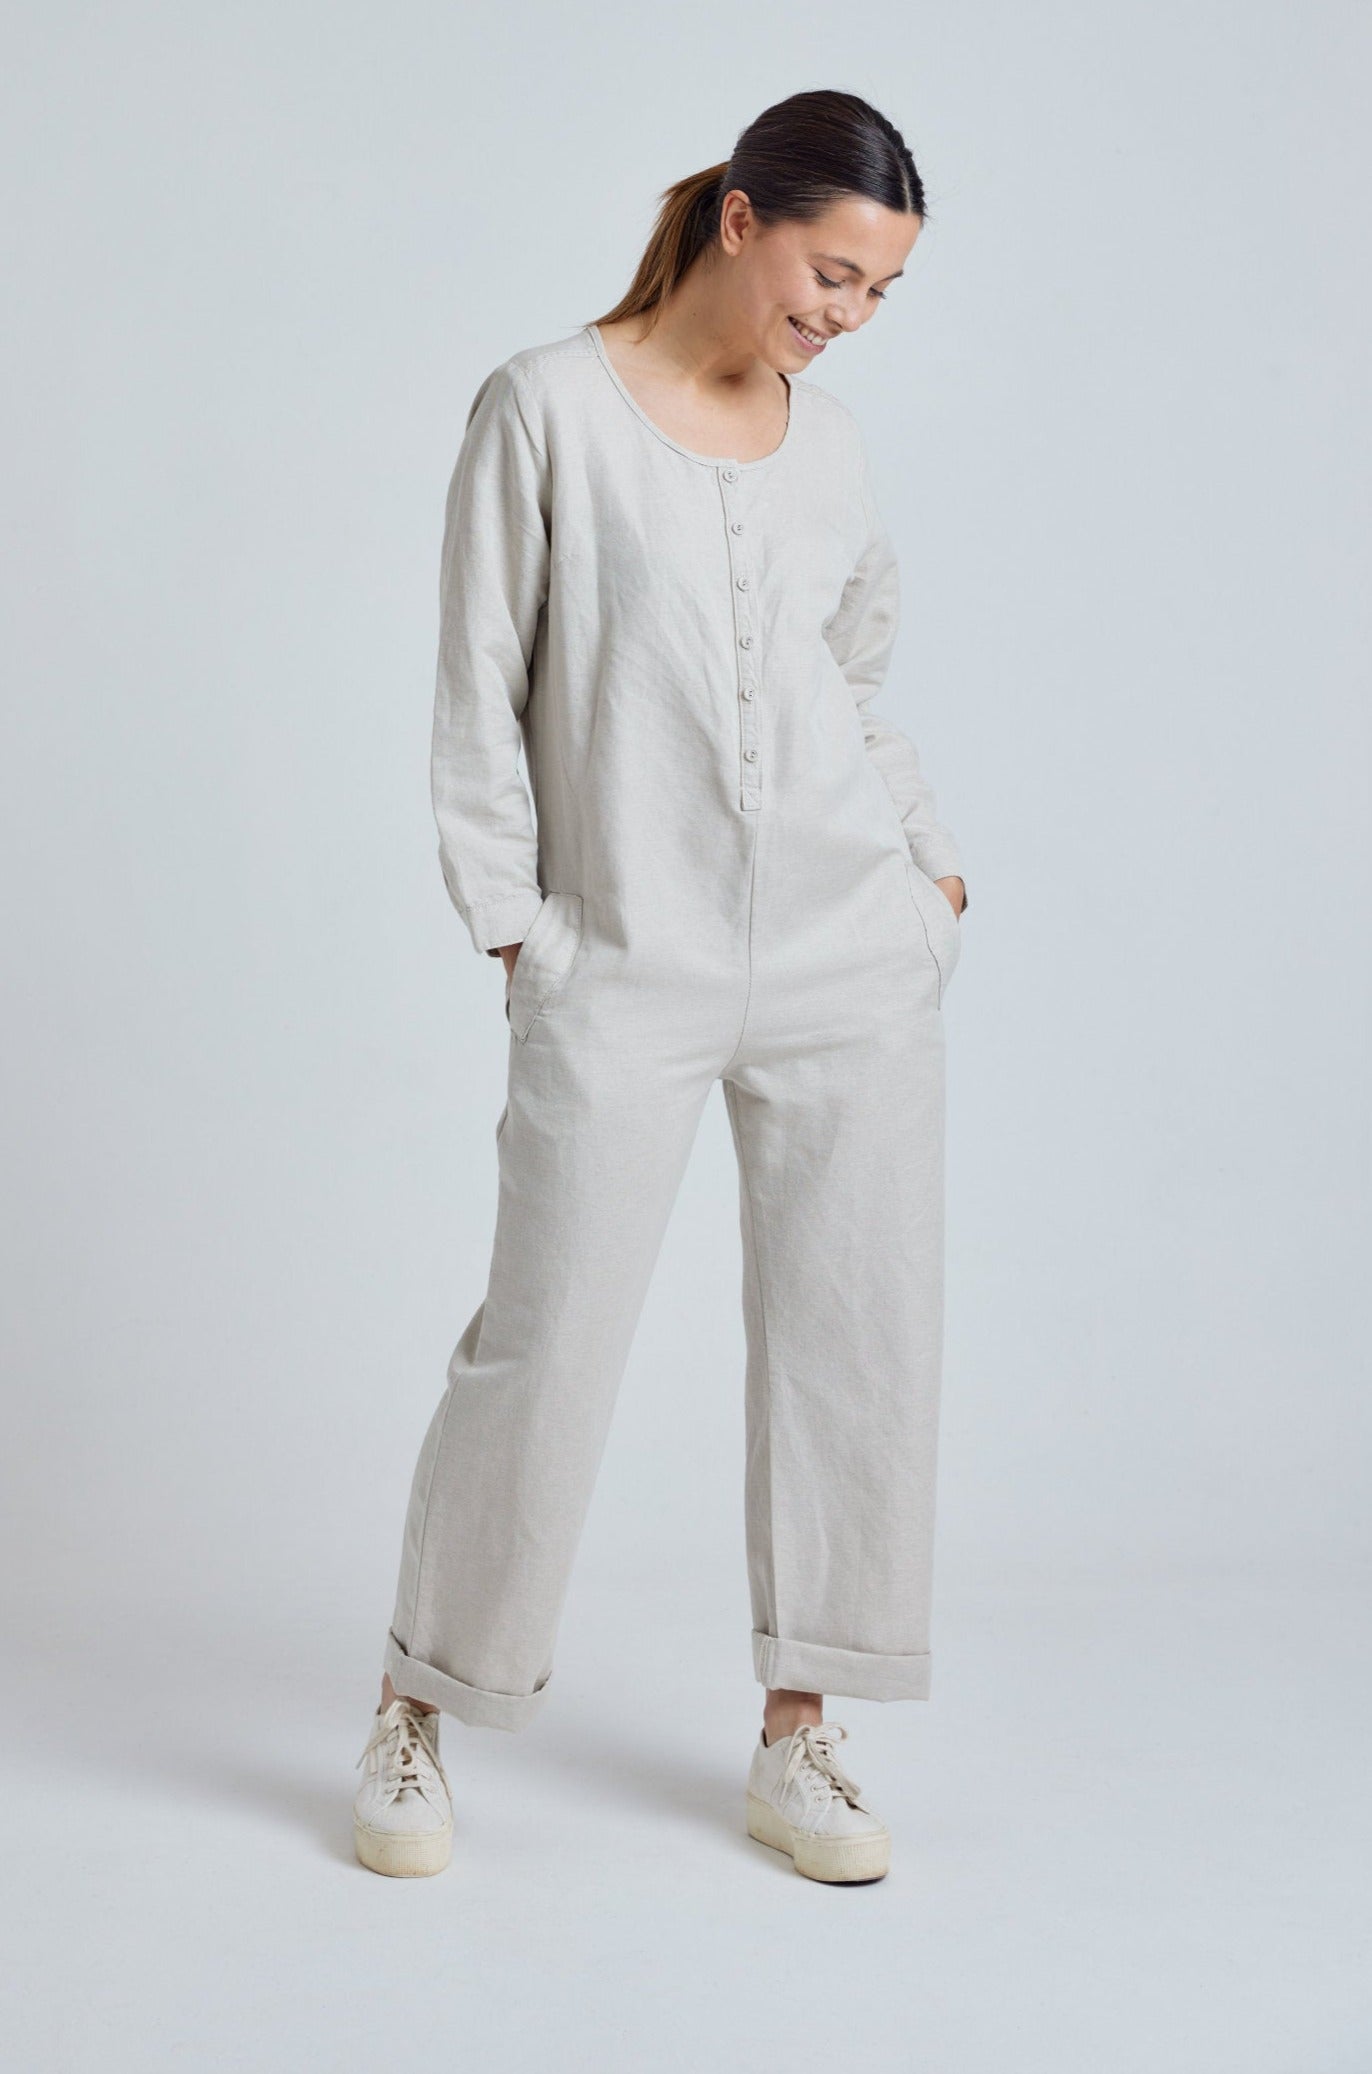 CLARA natural - GOTS Organic Cotton Jumpsuit by Flax & Loom, XS